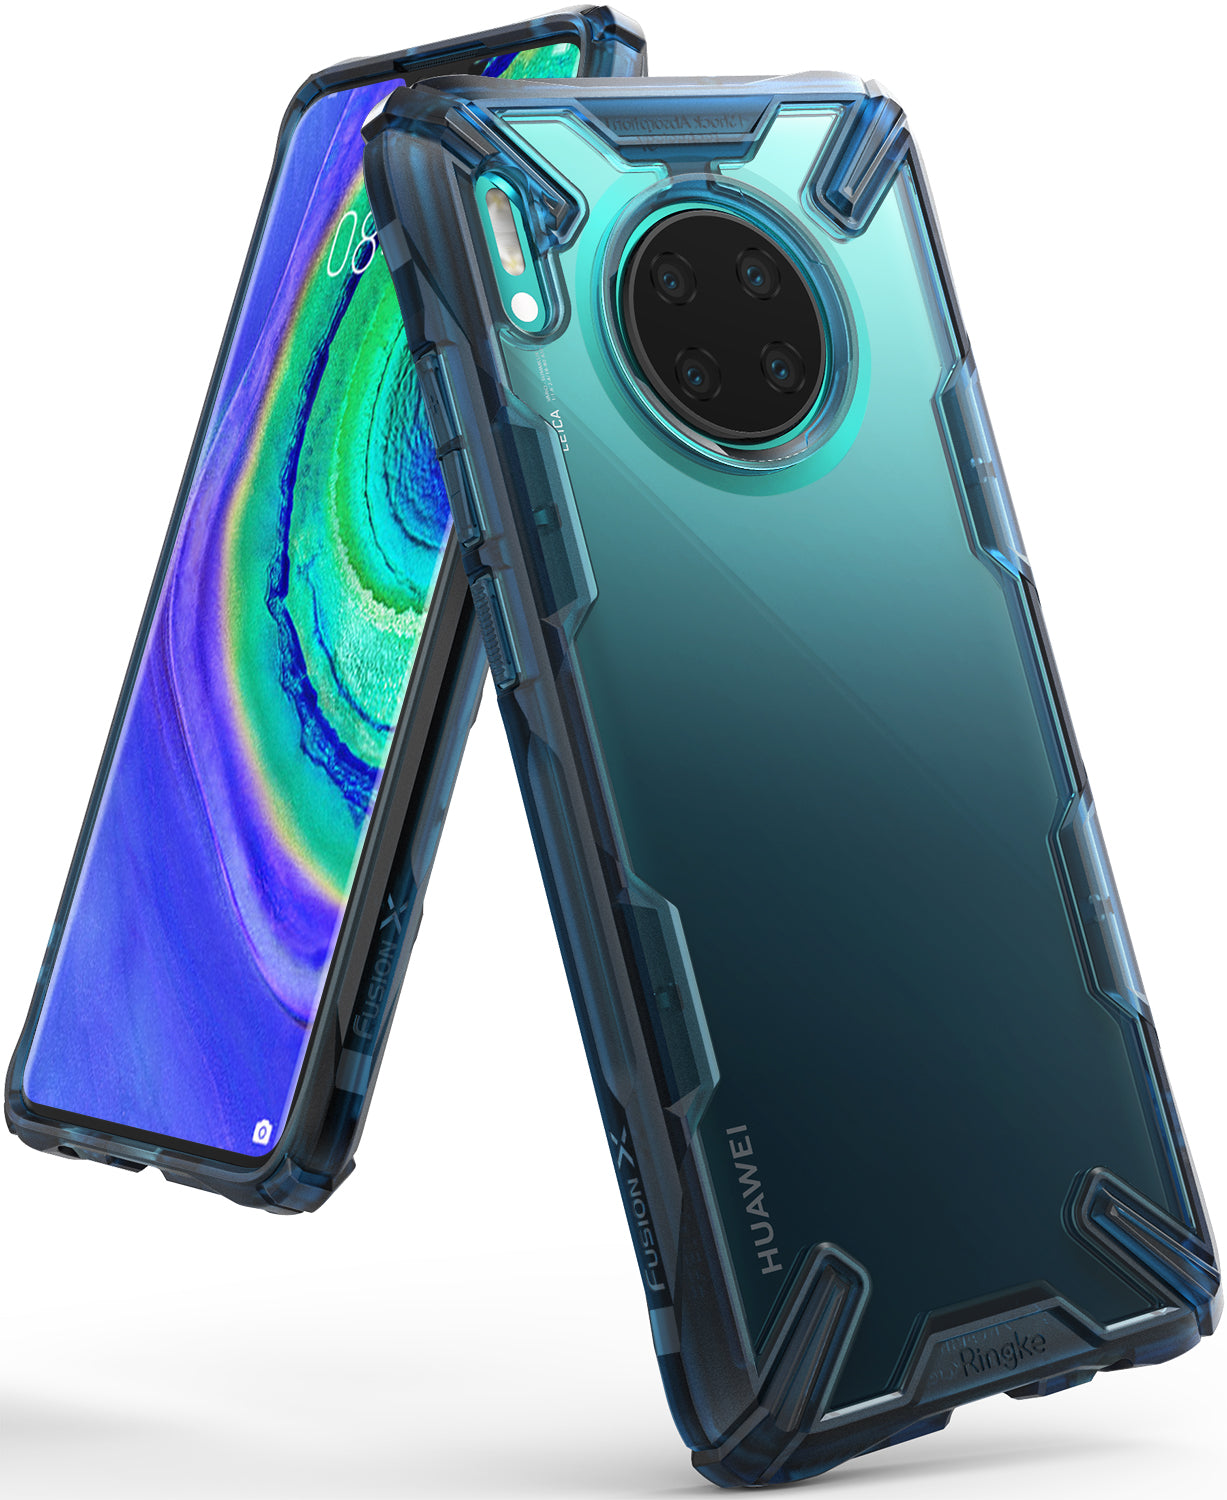 Huawei Mate 30 [FUSION-X] space blue